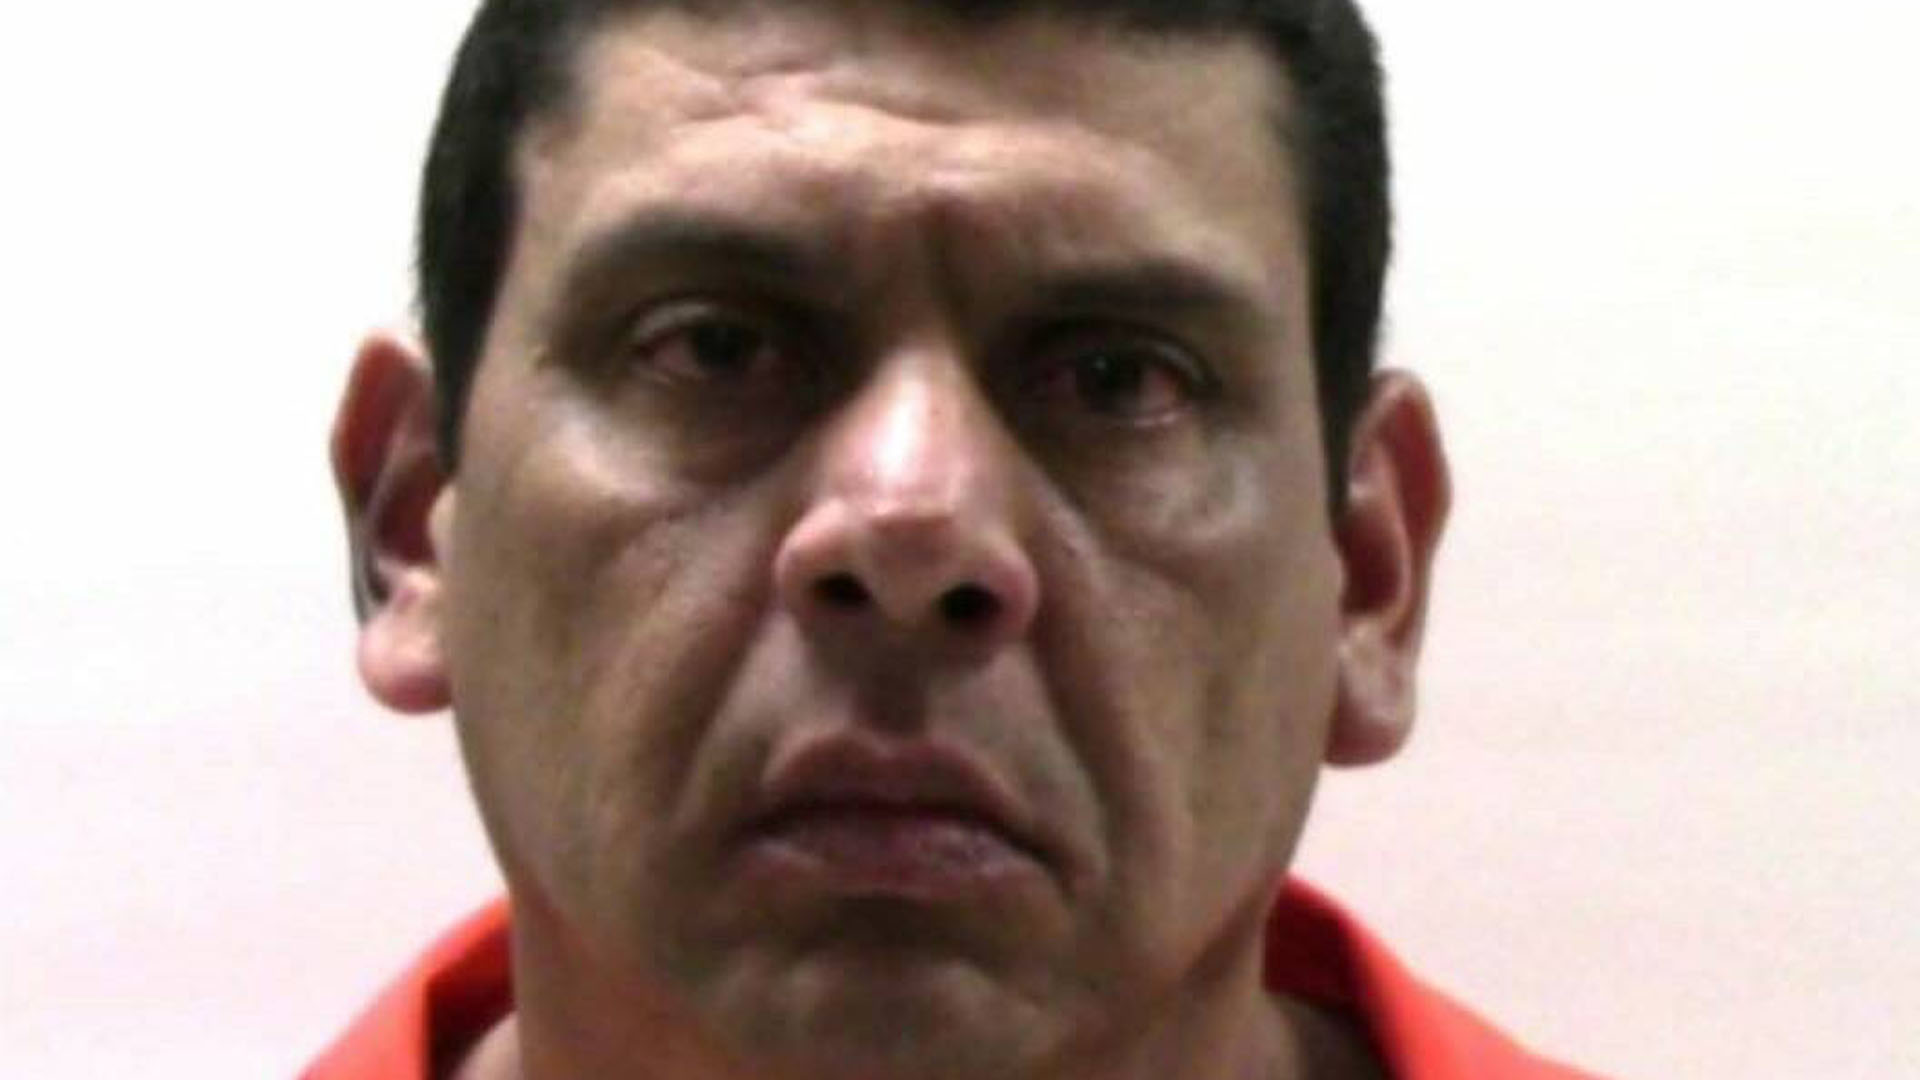 San Benito man who sexually assaulted teen to ‘fulfill fantasy’ sought